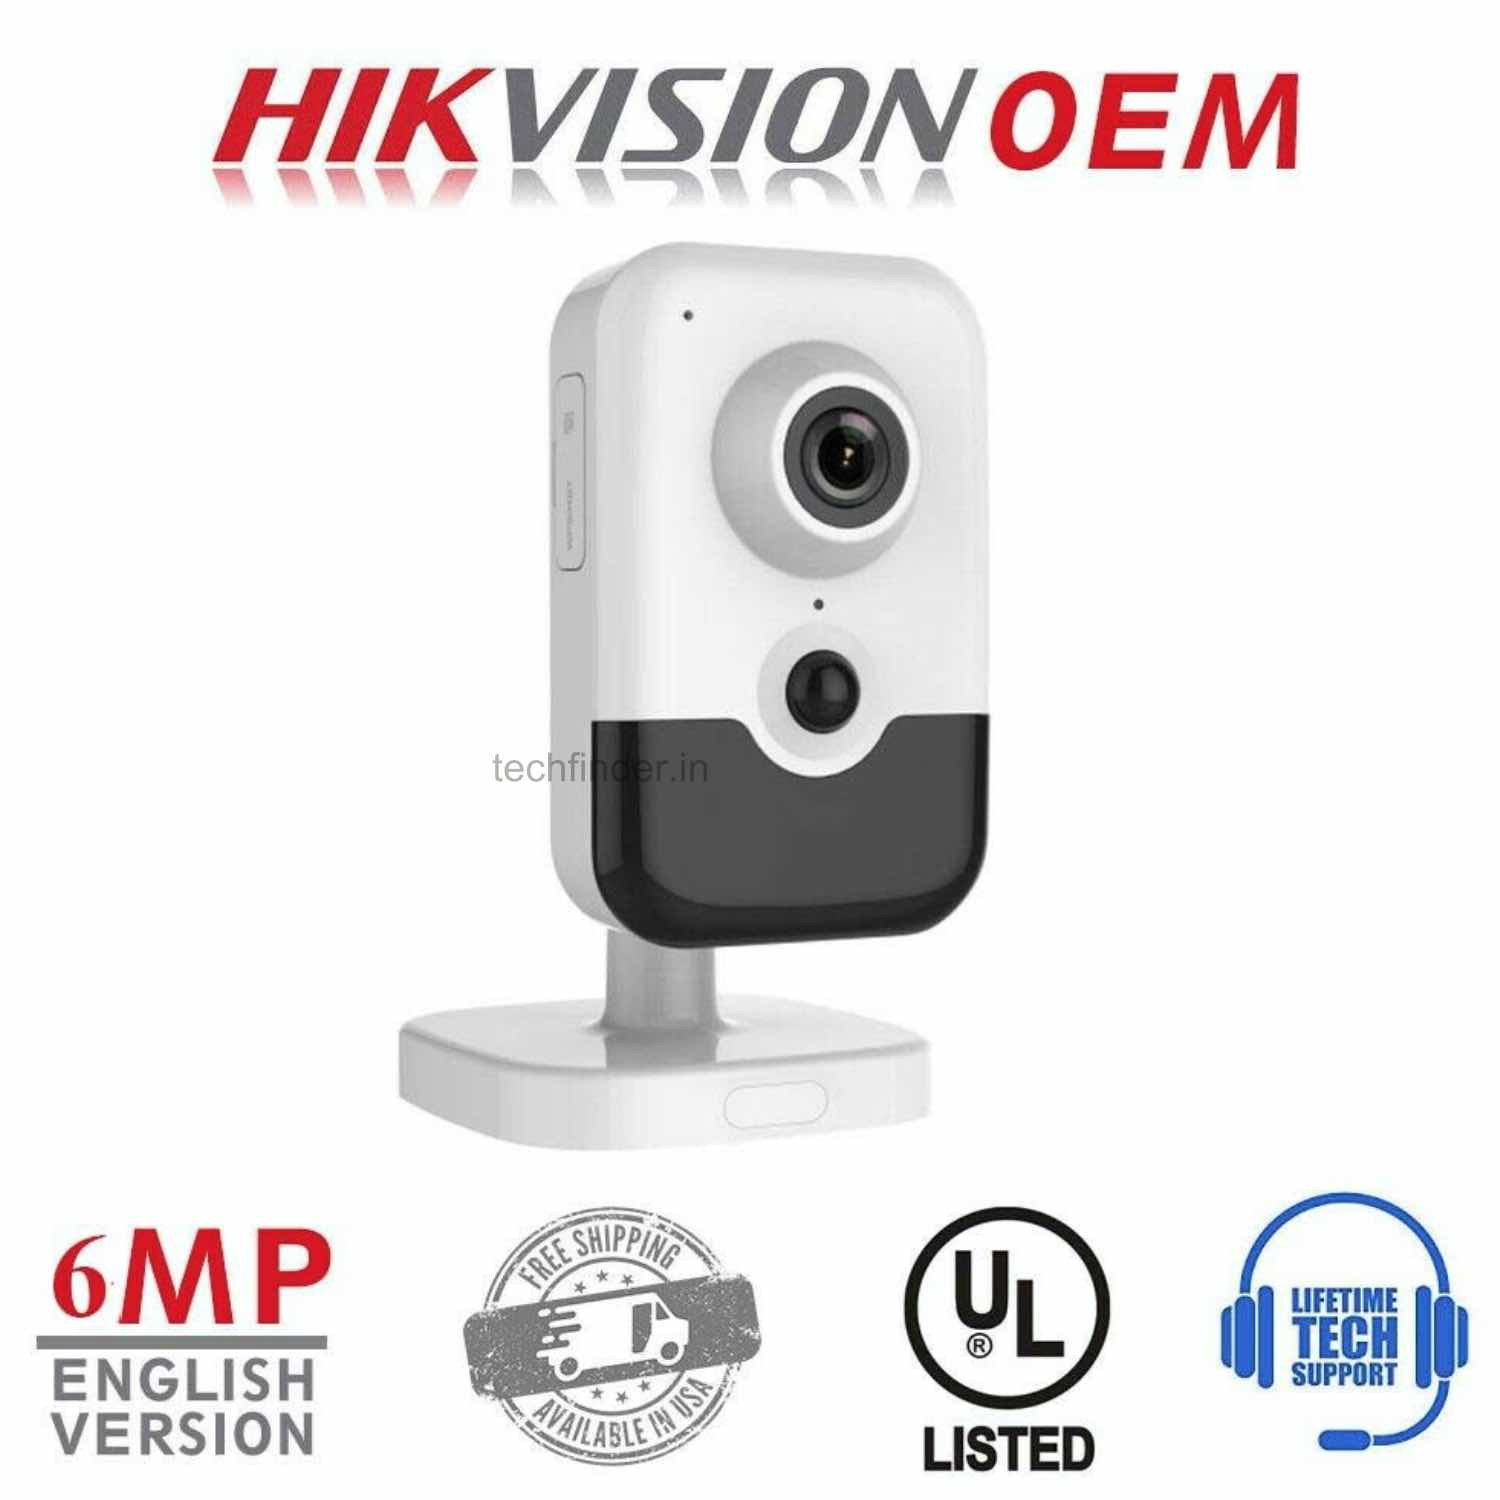 Hikvision DS-2CD2463G0-I(W) 6MP IR Wi-Fi Fixed Cube Digital Ip Camera